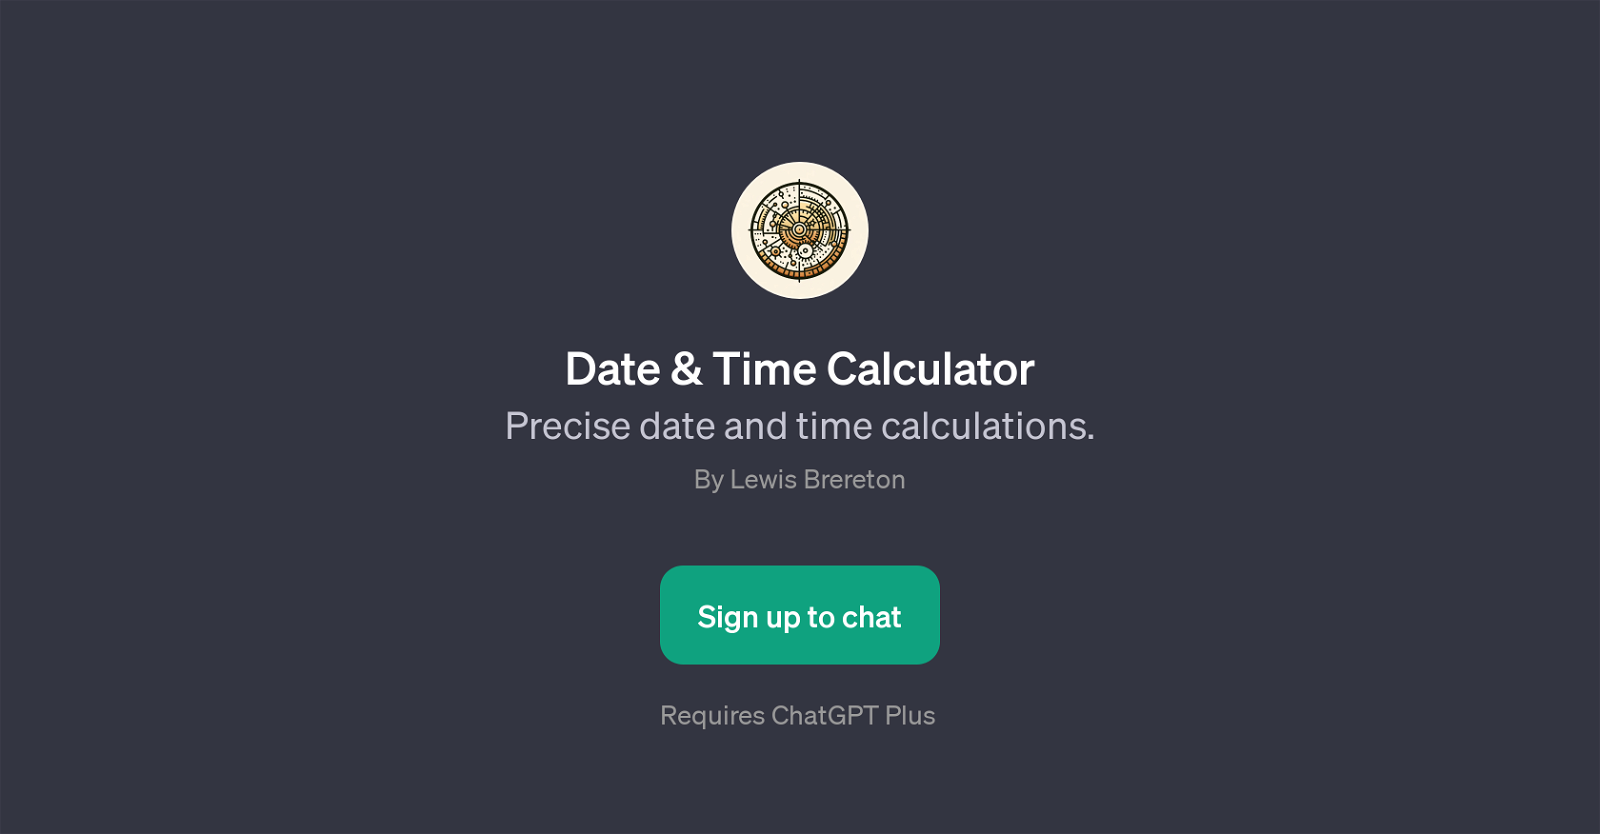 Date & Time Calculator website